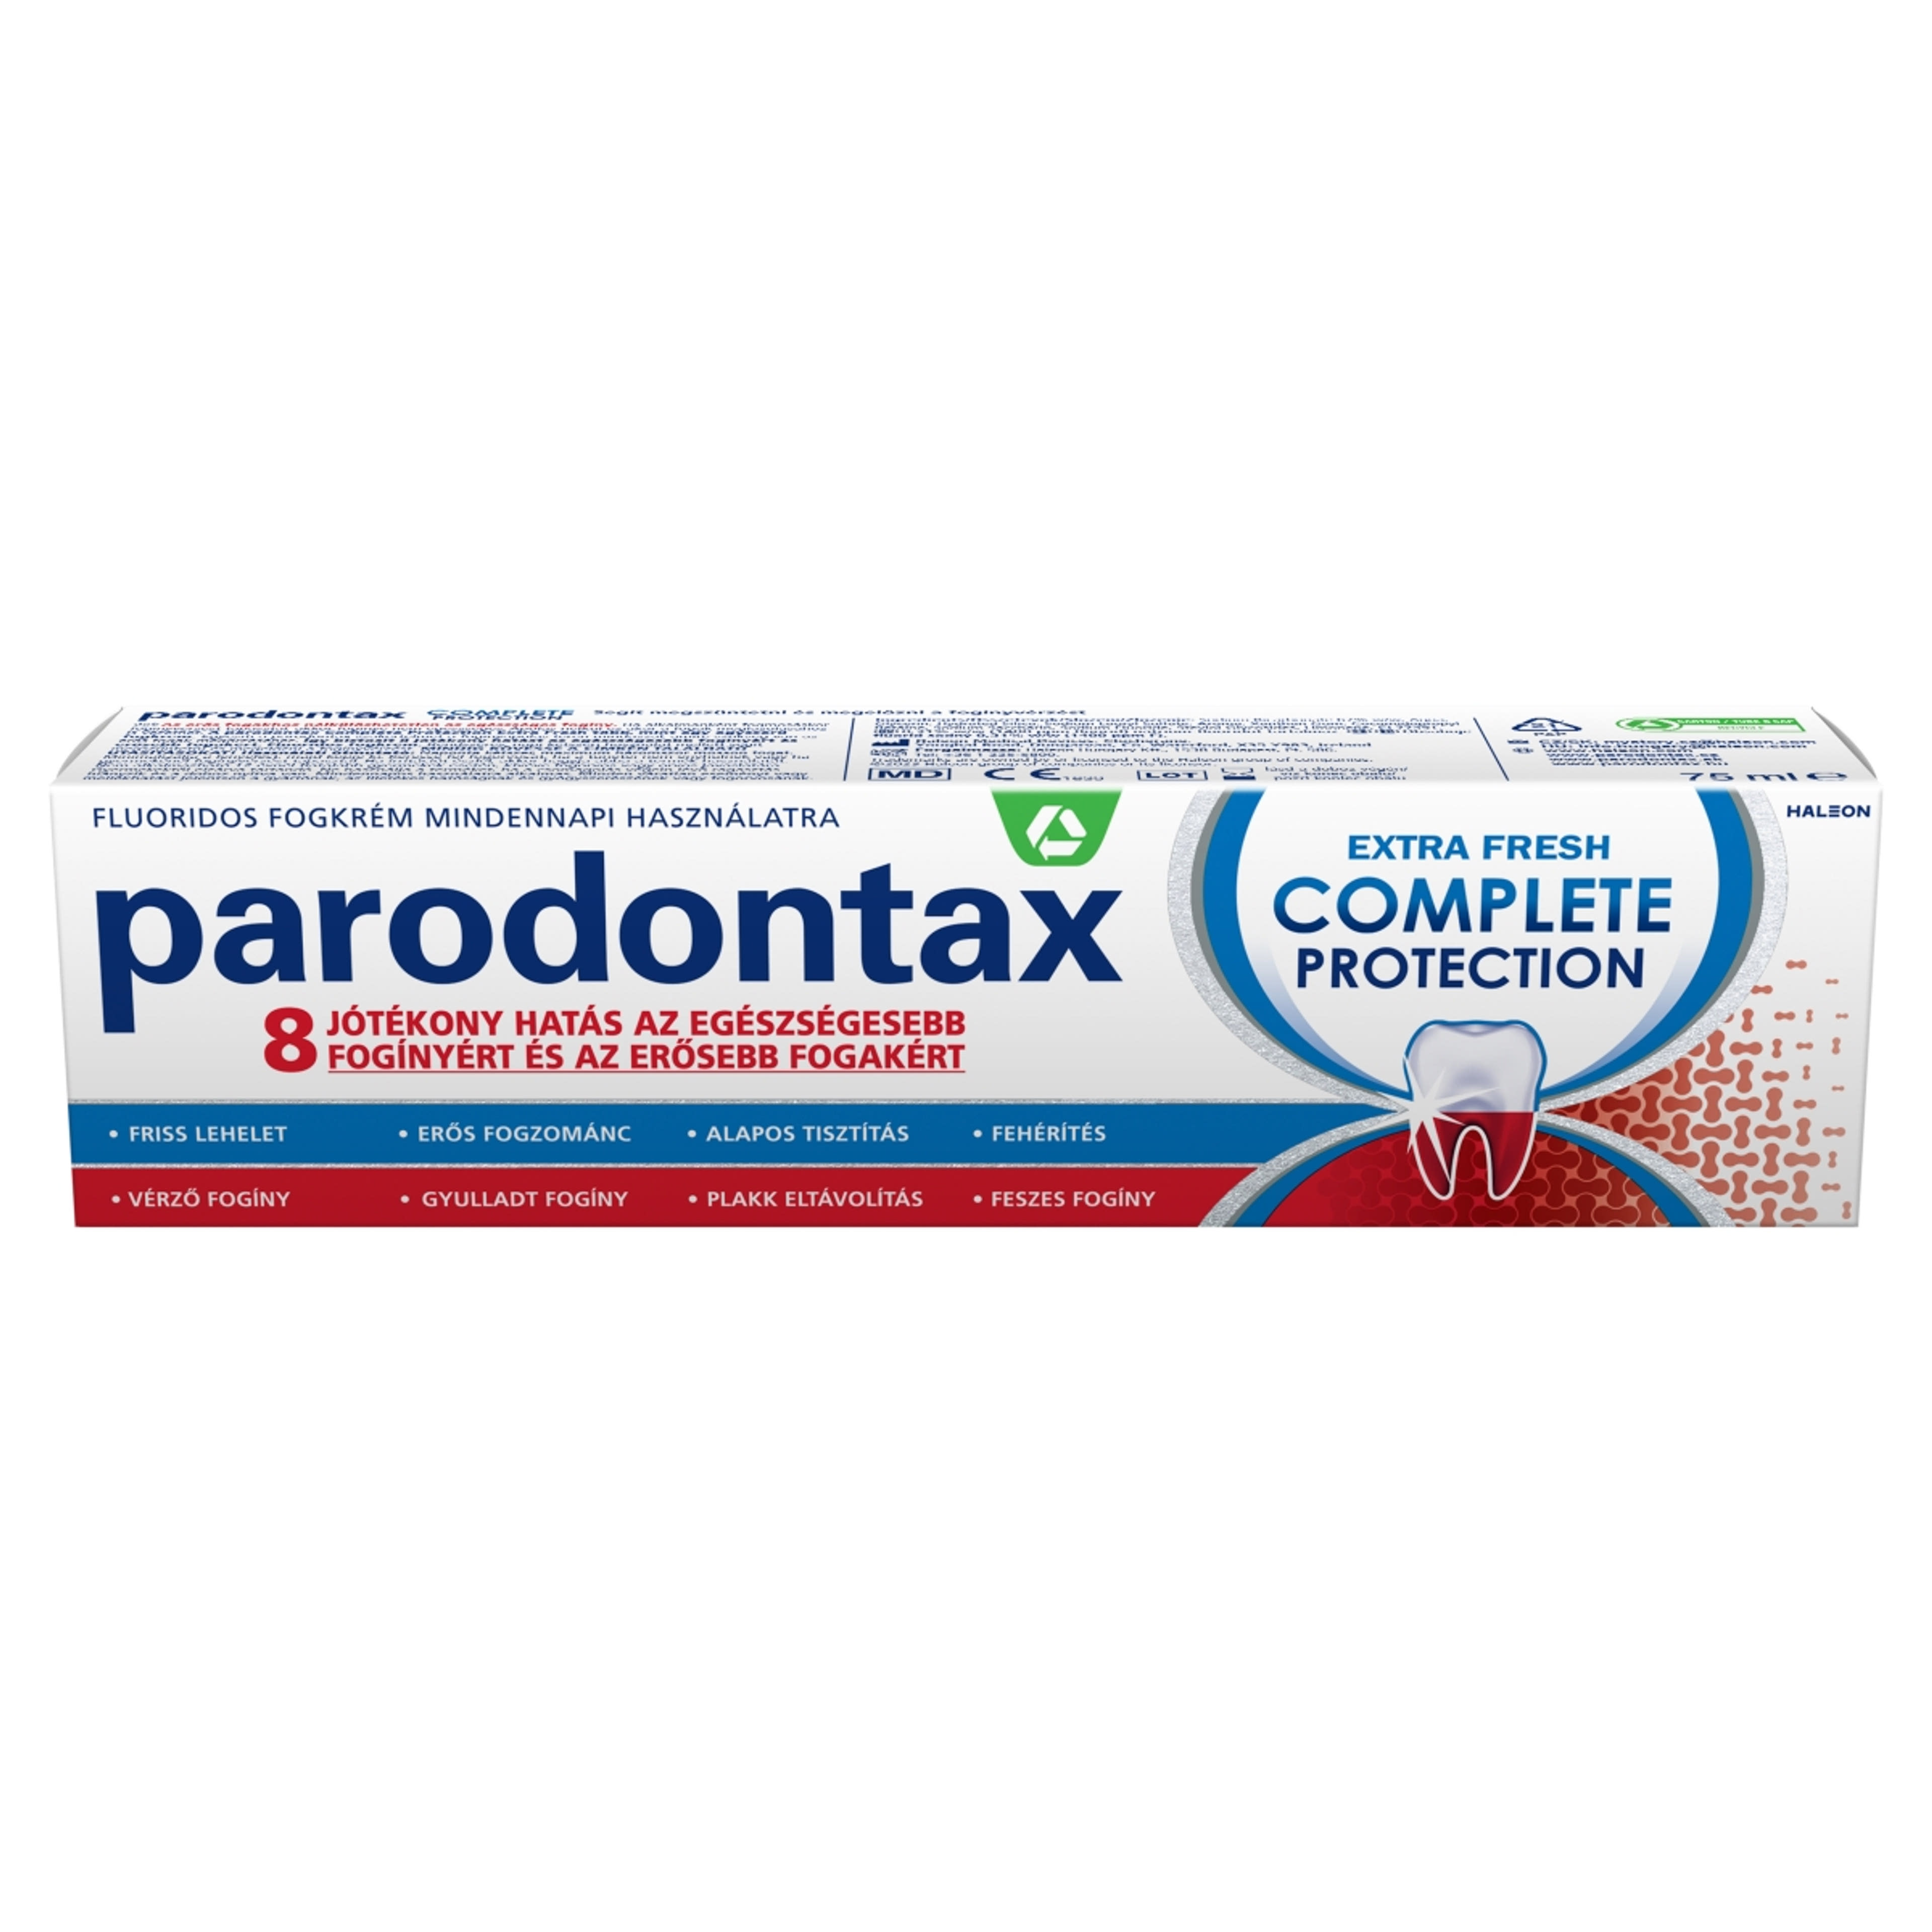 Parodontax Complete Protection Extra Fresh fogkrém - 75 ml-1